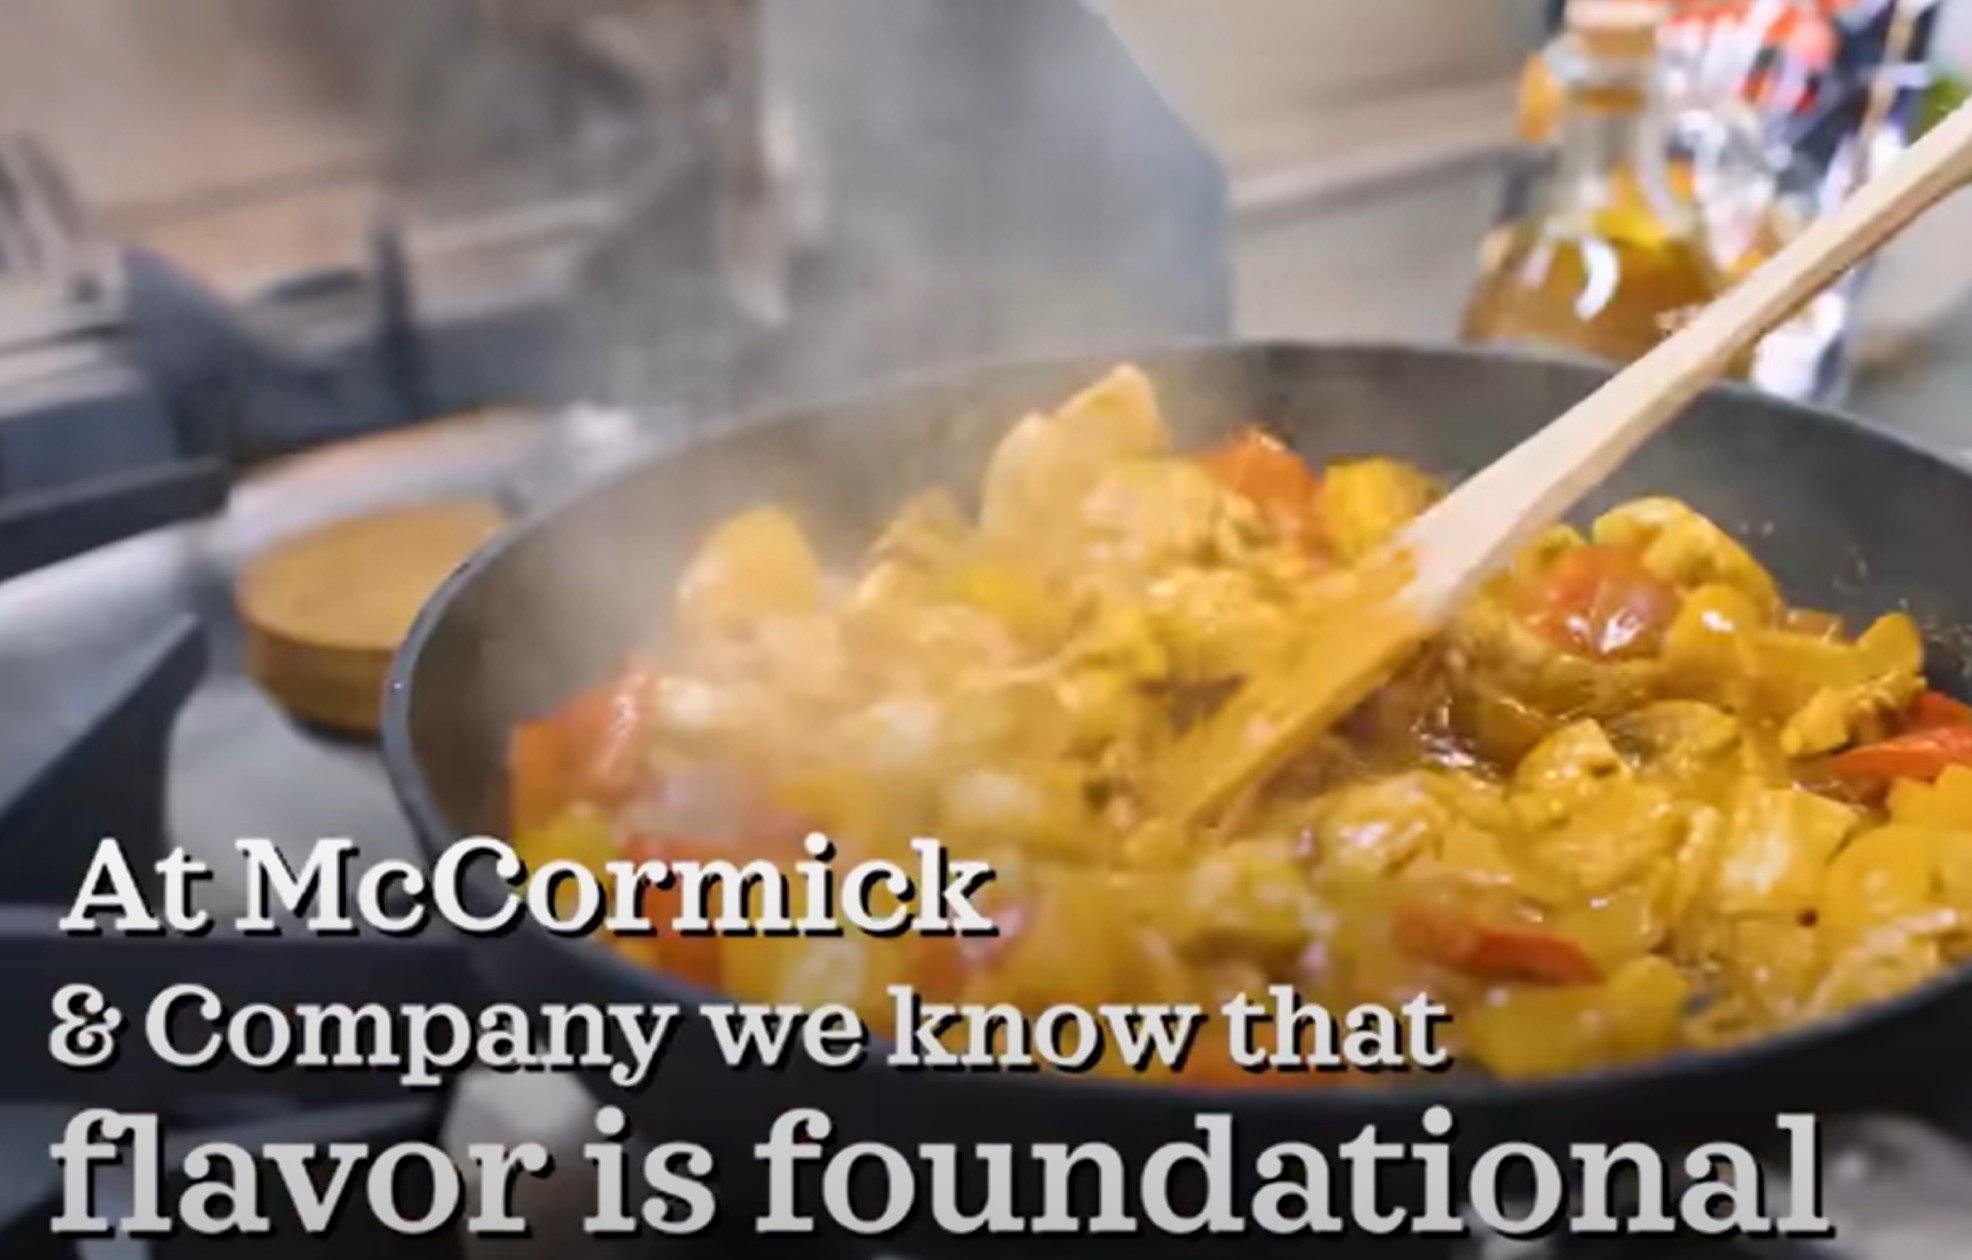 McCormick: Healthy. Sustainable. Delicious.